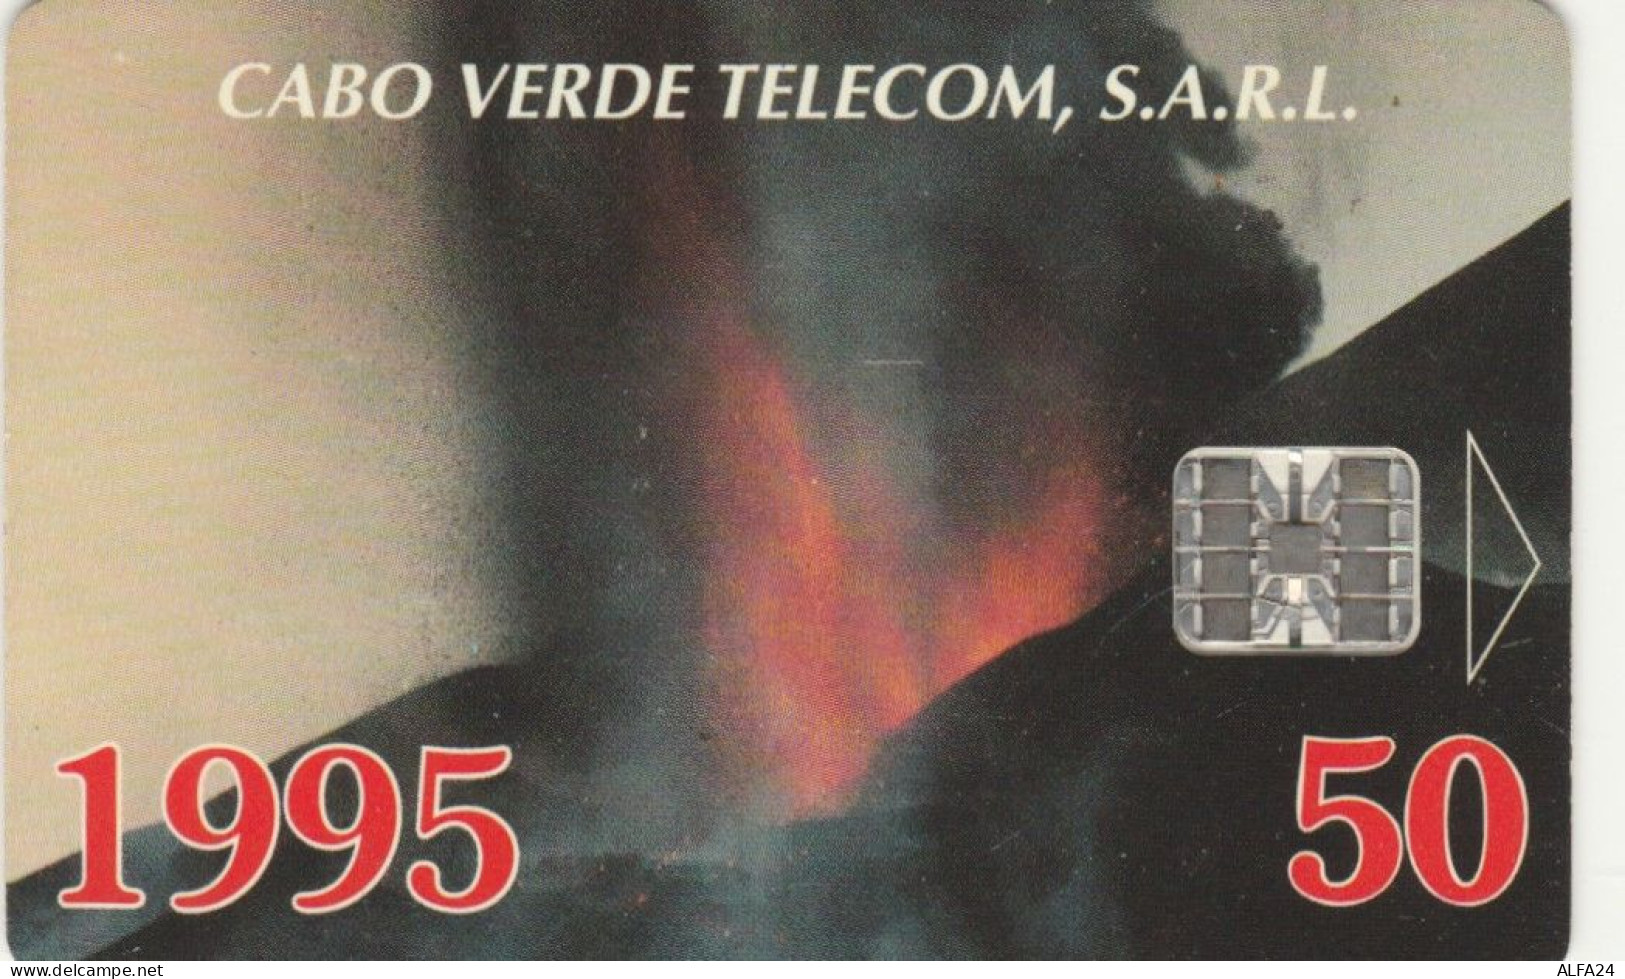 PHONE CARD CABO VERDE  (E102.45.8 - Cape Verde